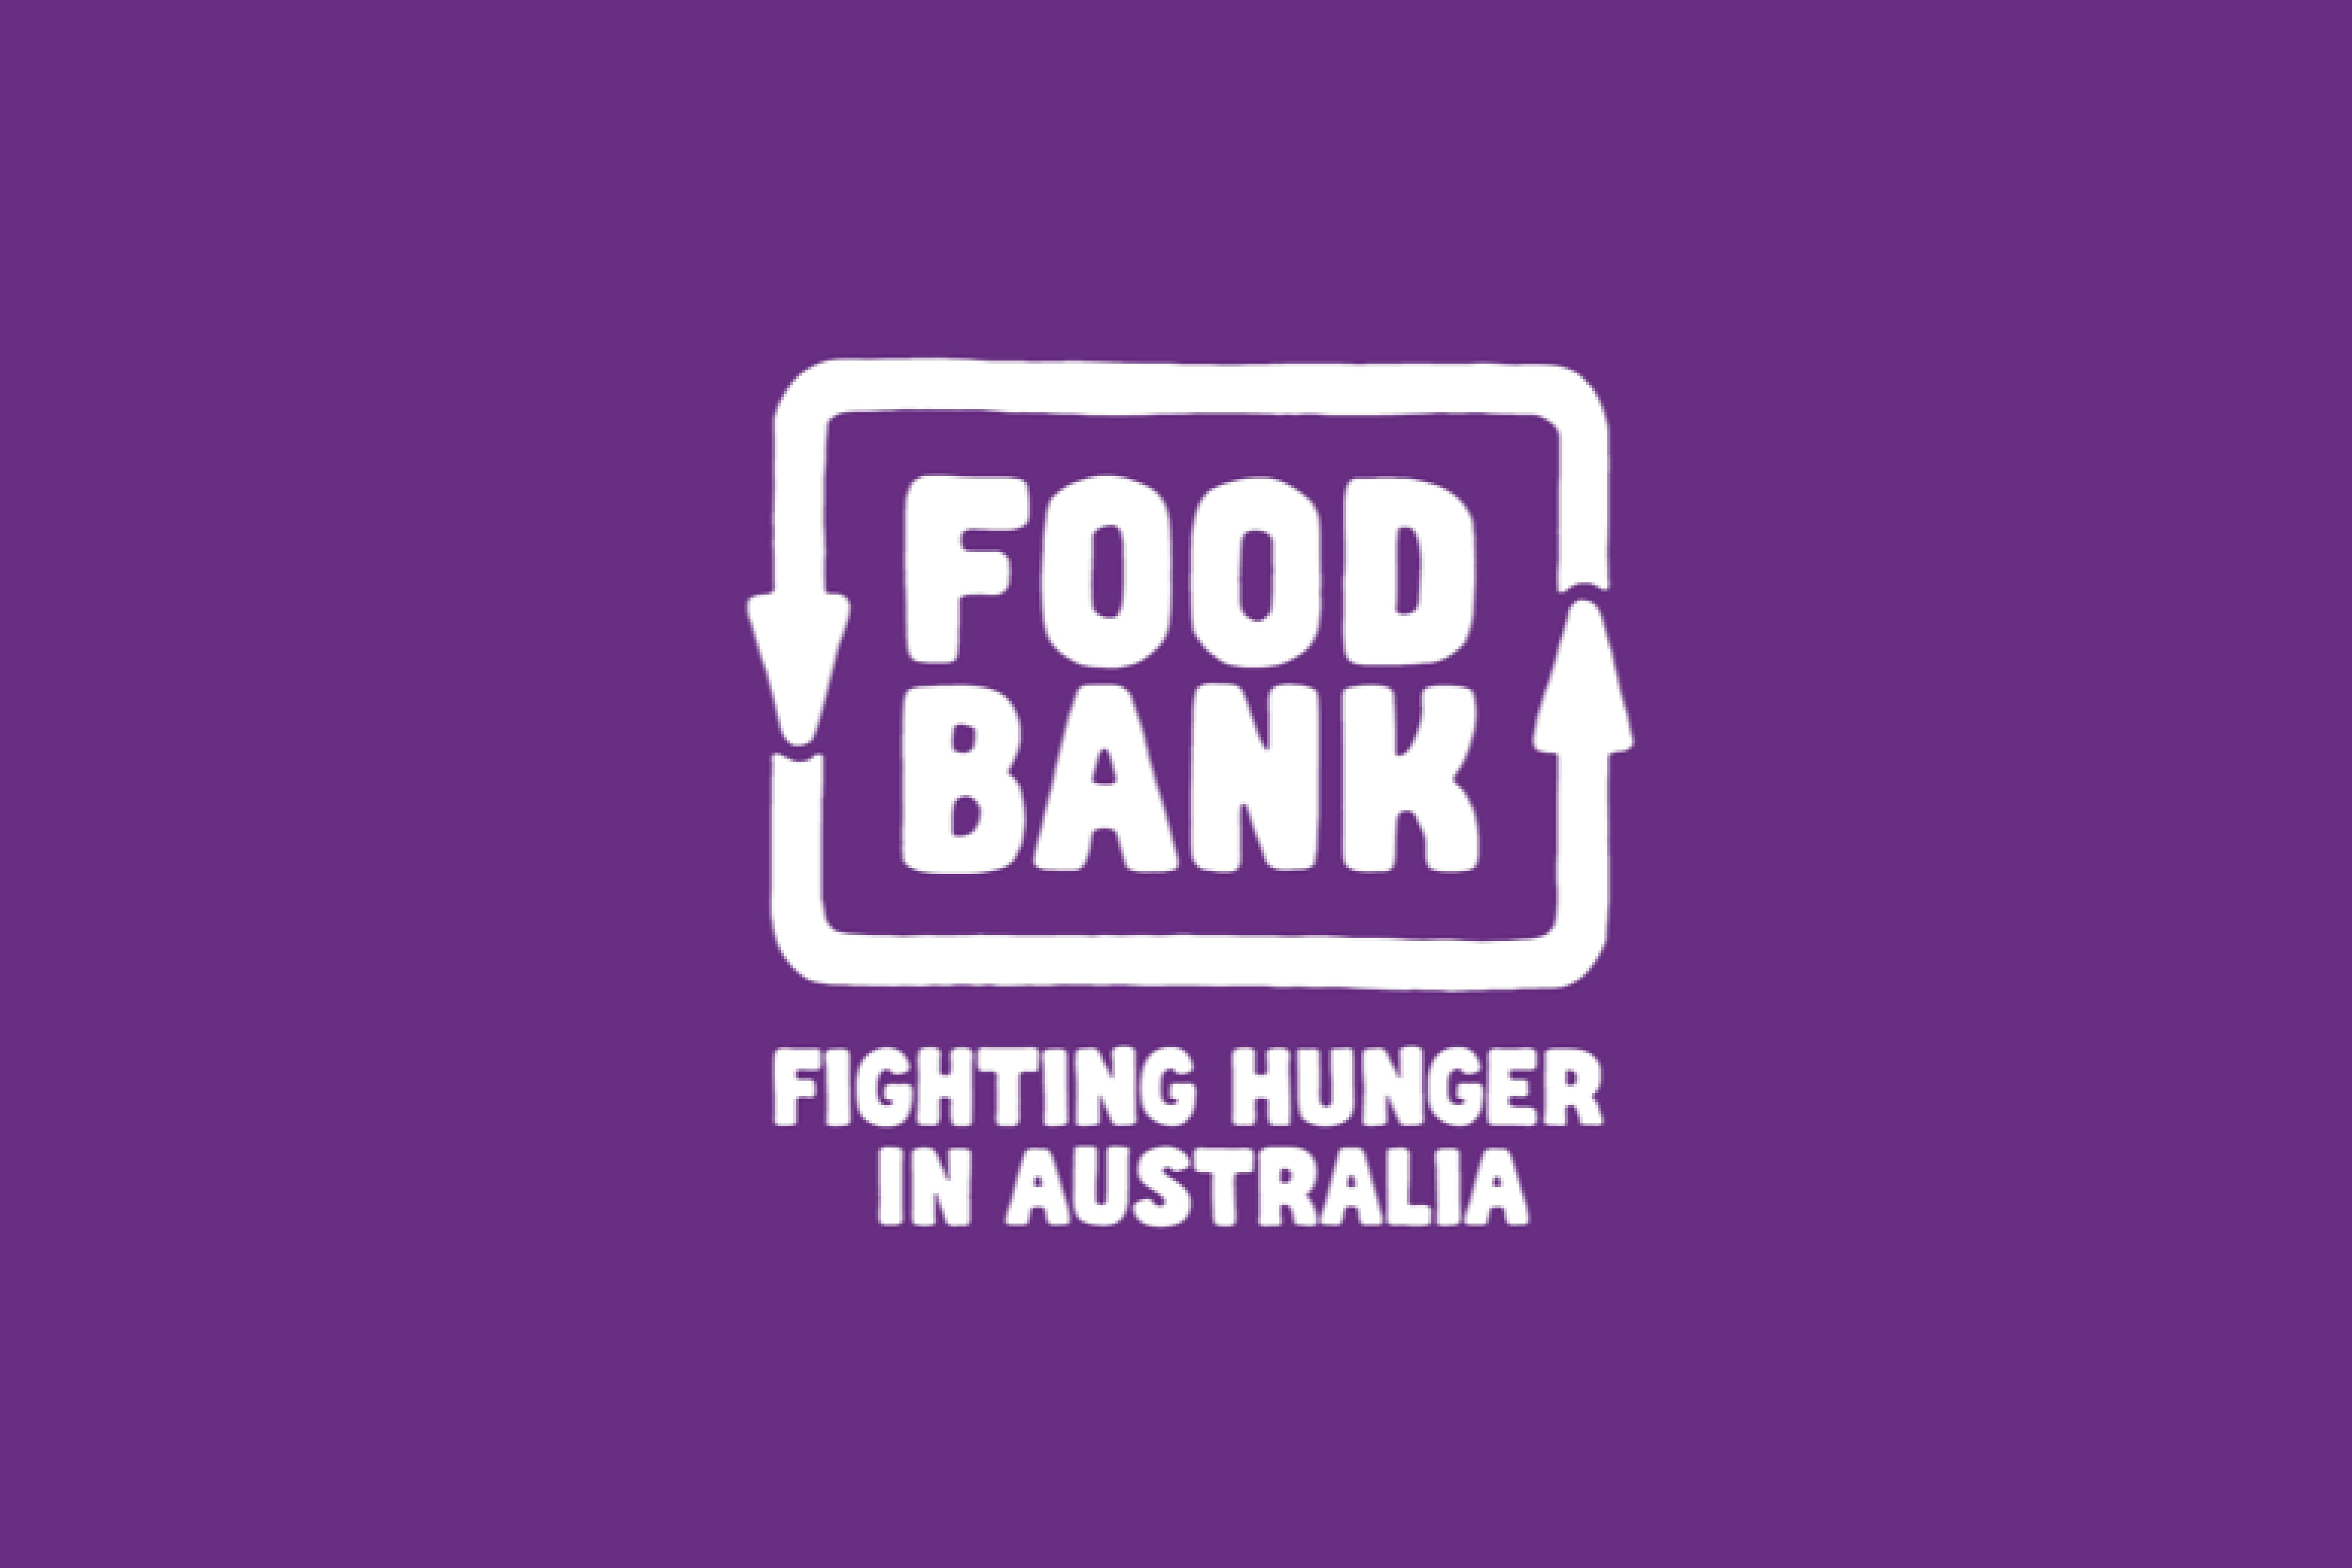 Food Drive - Food Bank Victoria